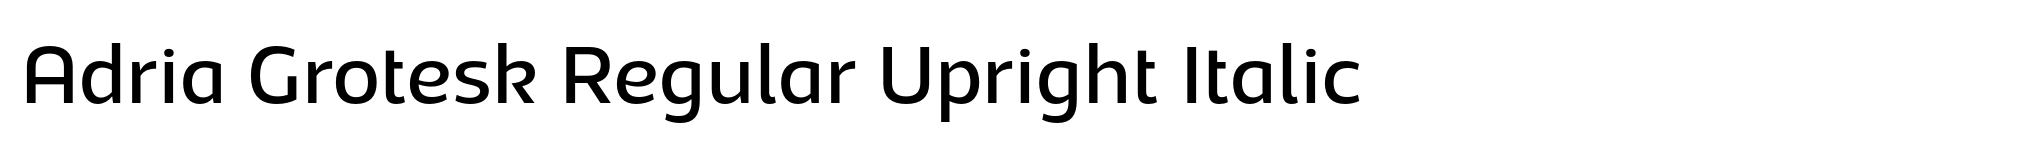 Adria Grotesk Regular Upright Italic image